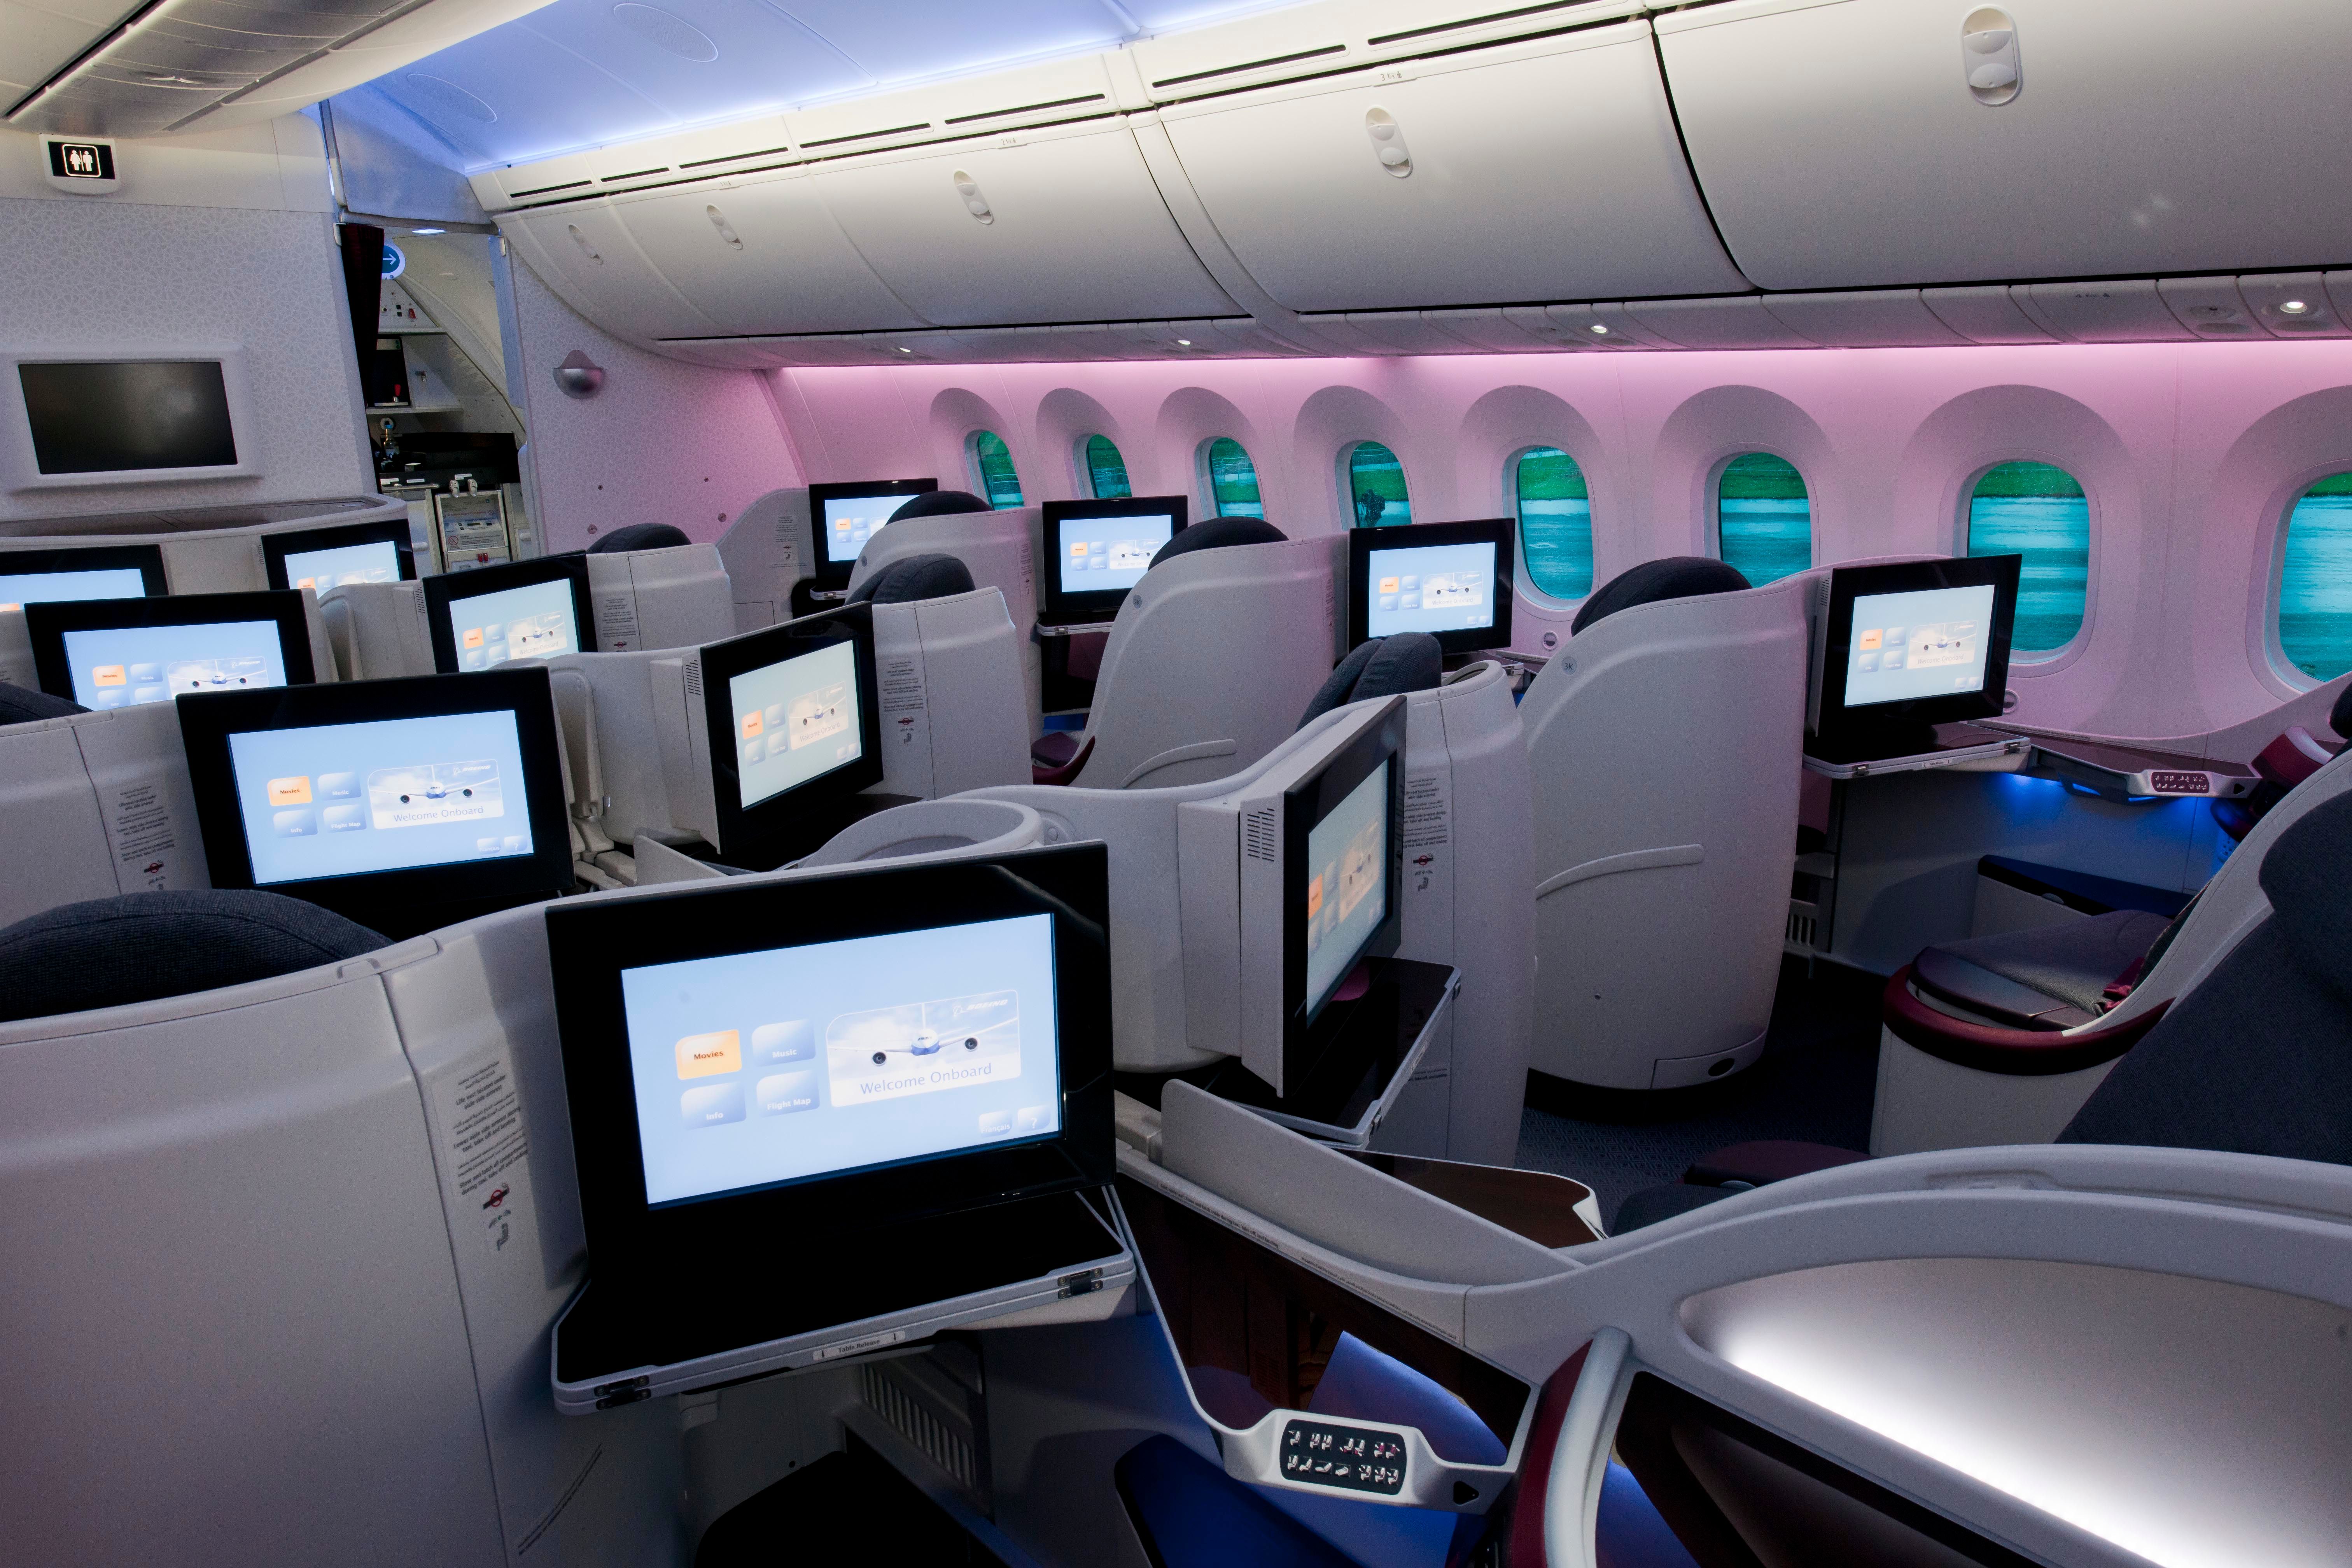 Inside the Qatar Airways business class cabin.